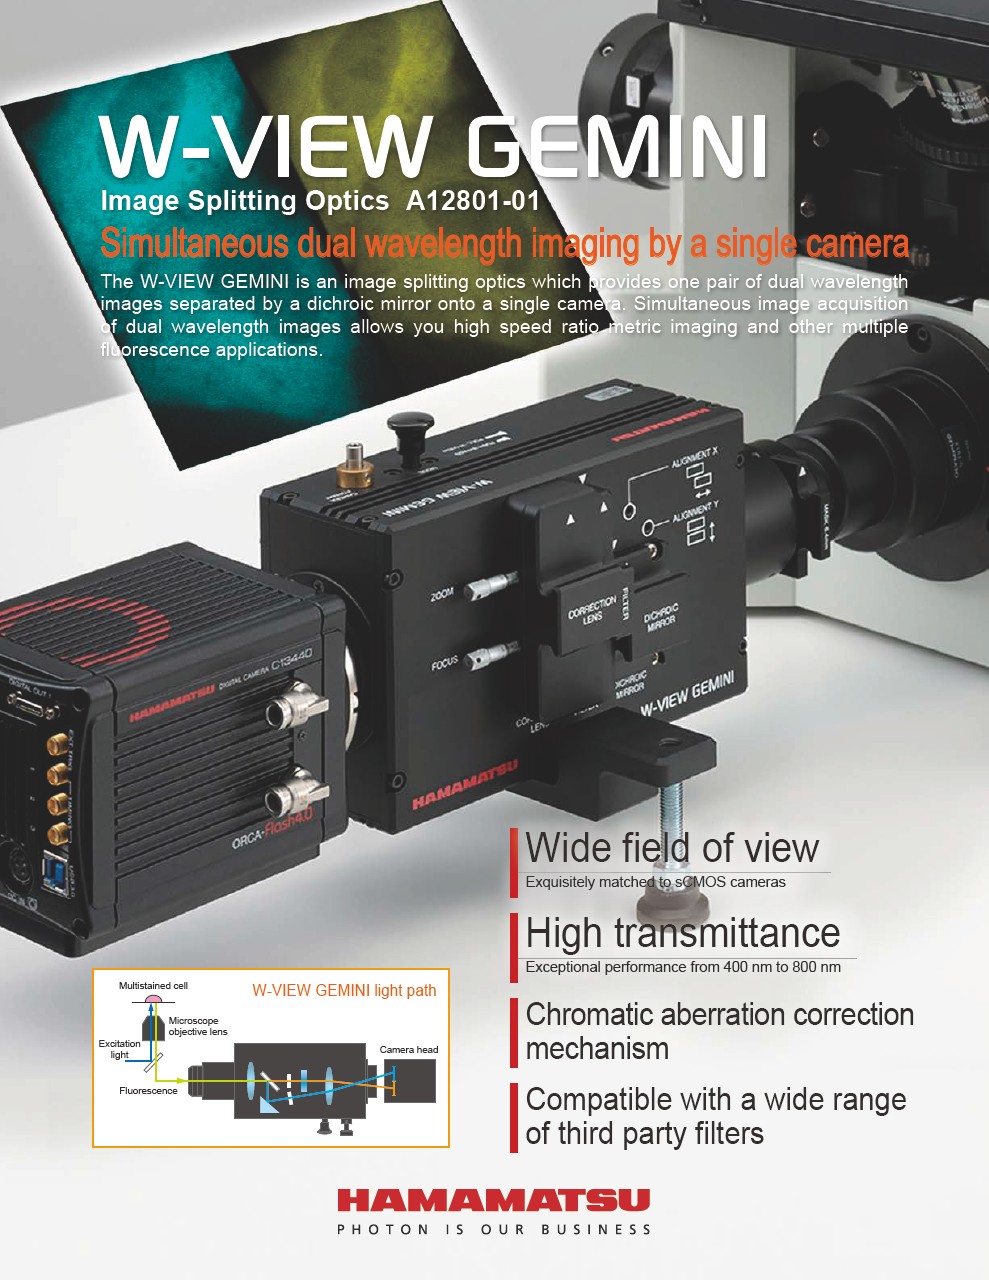 W-VIEW GEMINI Image Splitting Optics A12801-01